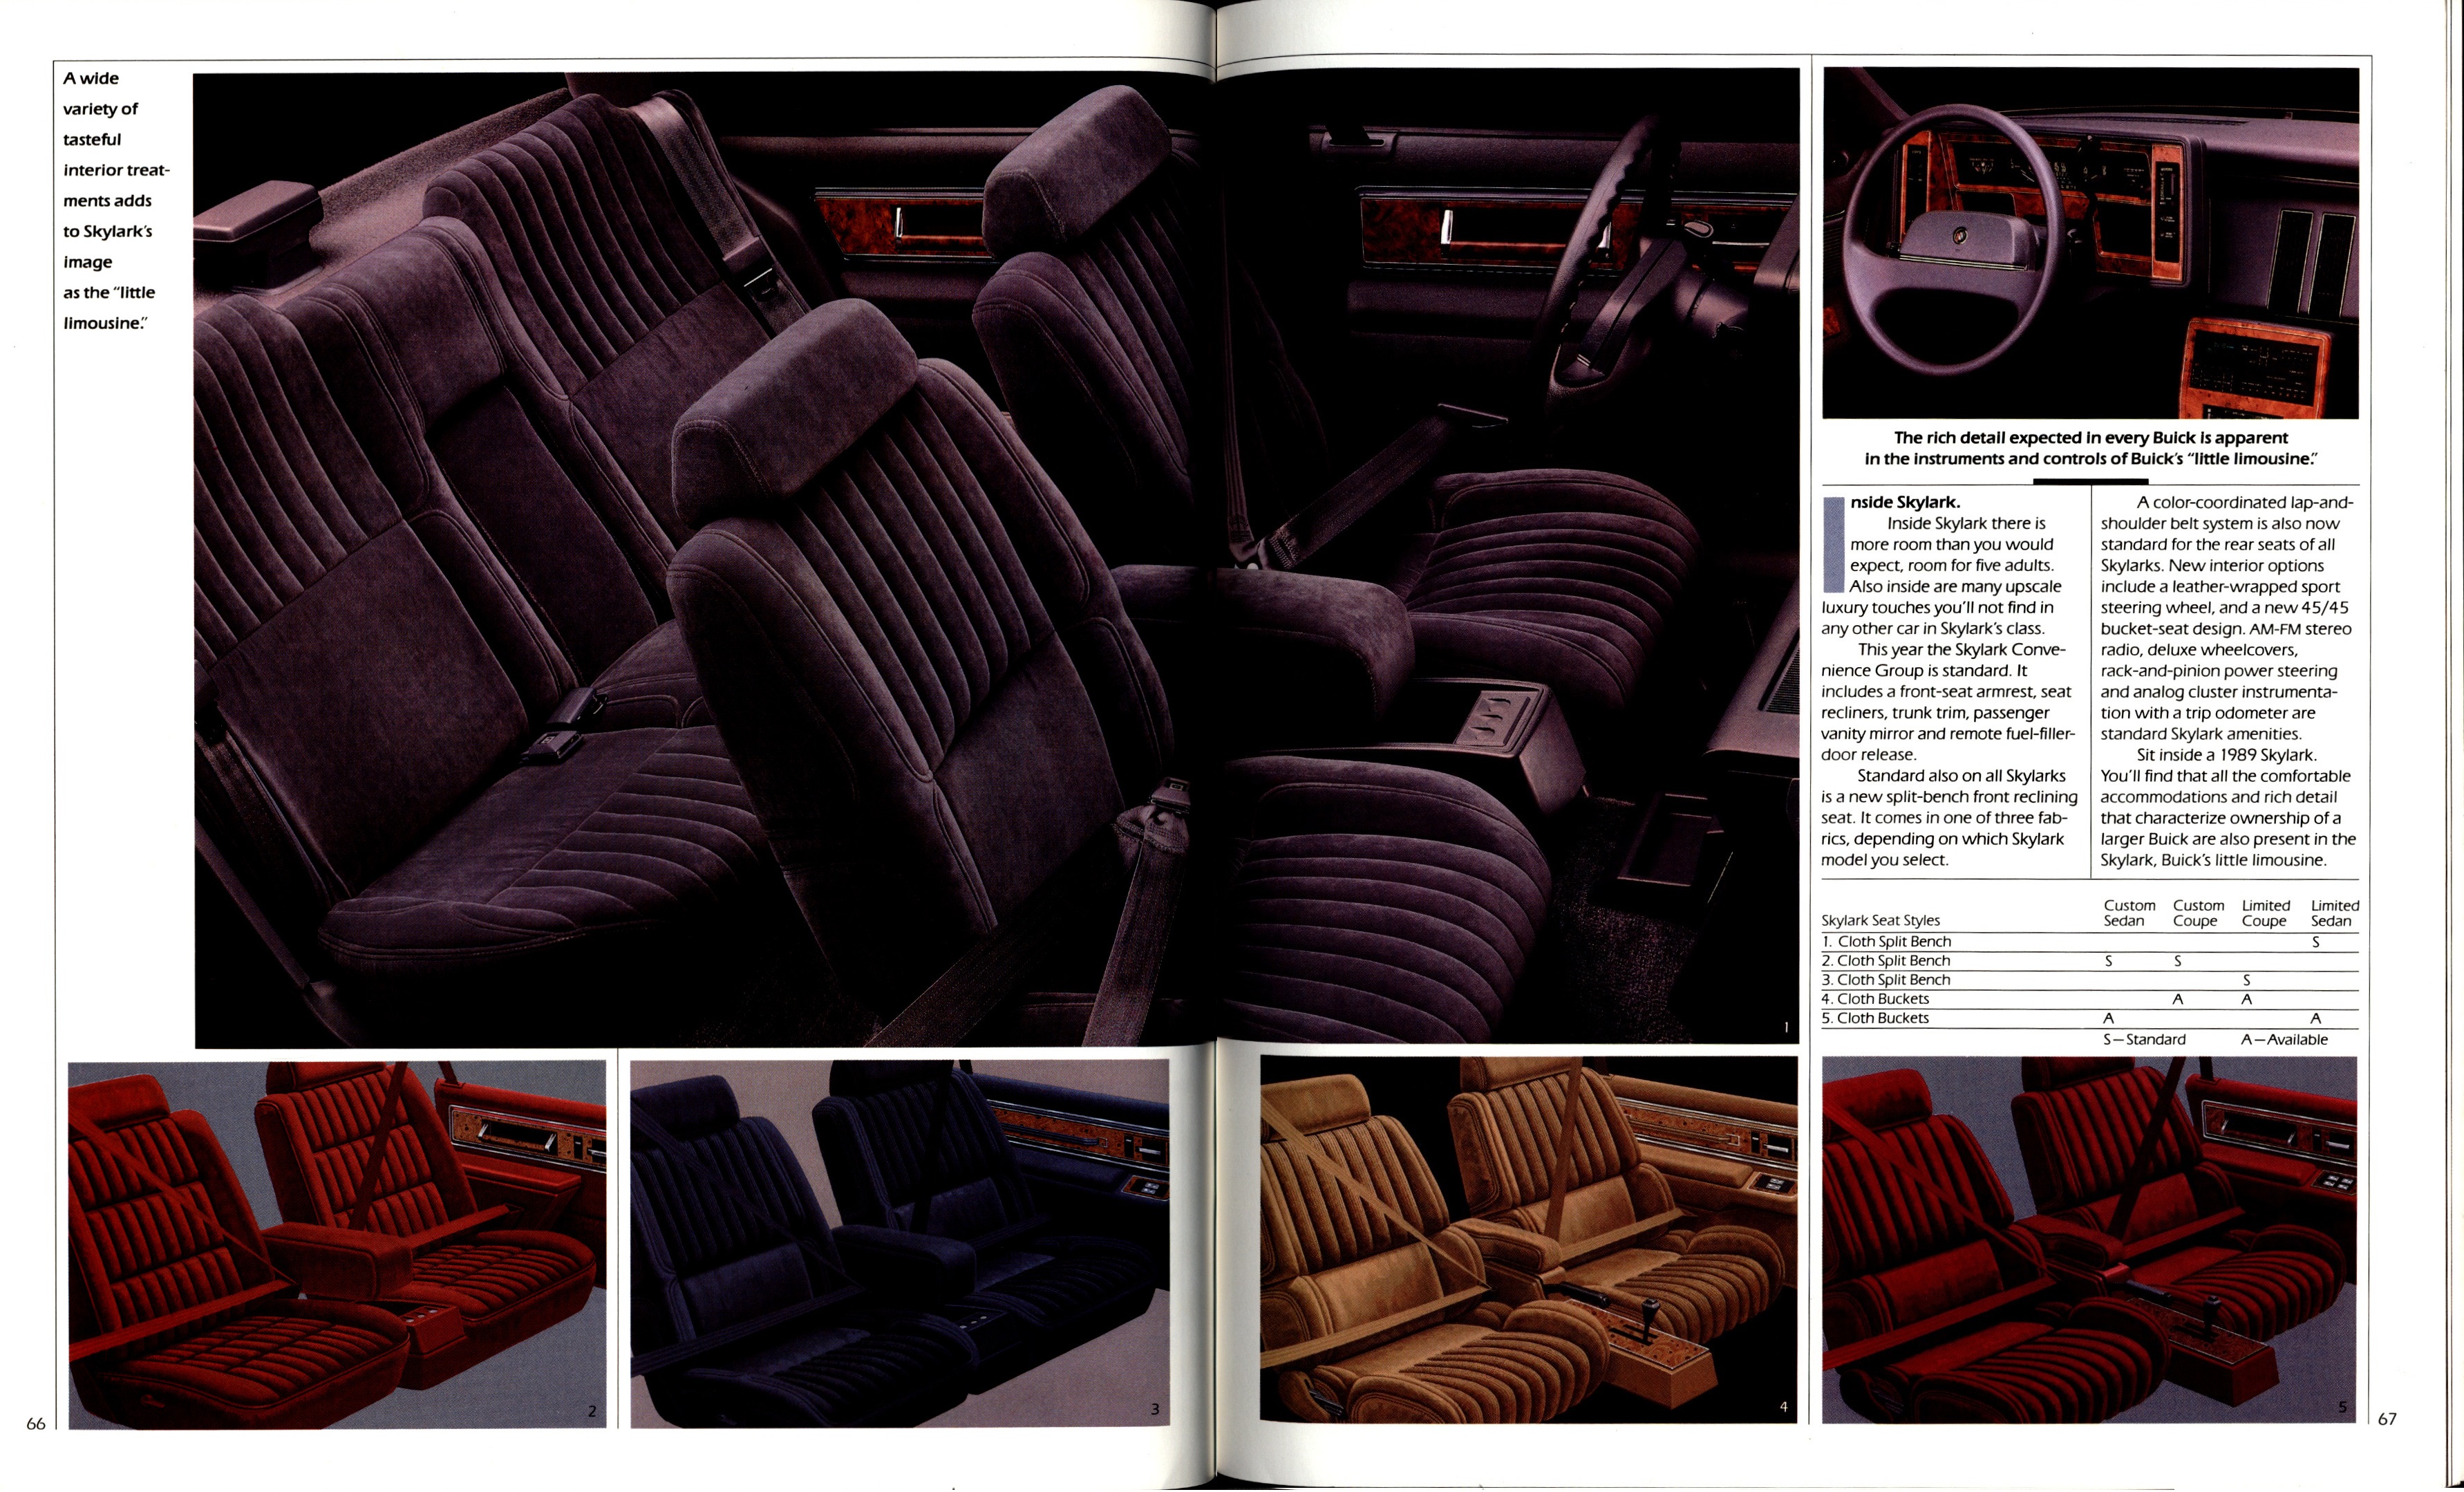 1989 Buick Full Line Prestige Brochure 66-67